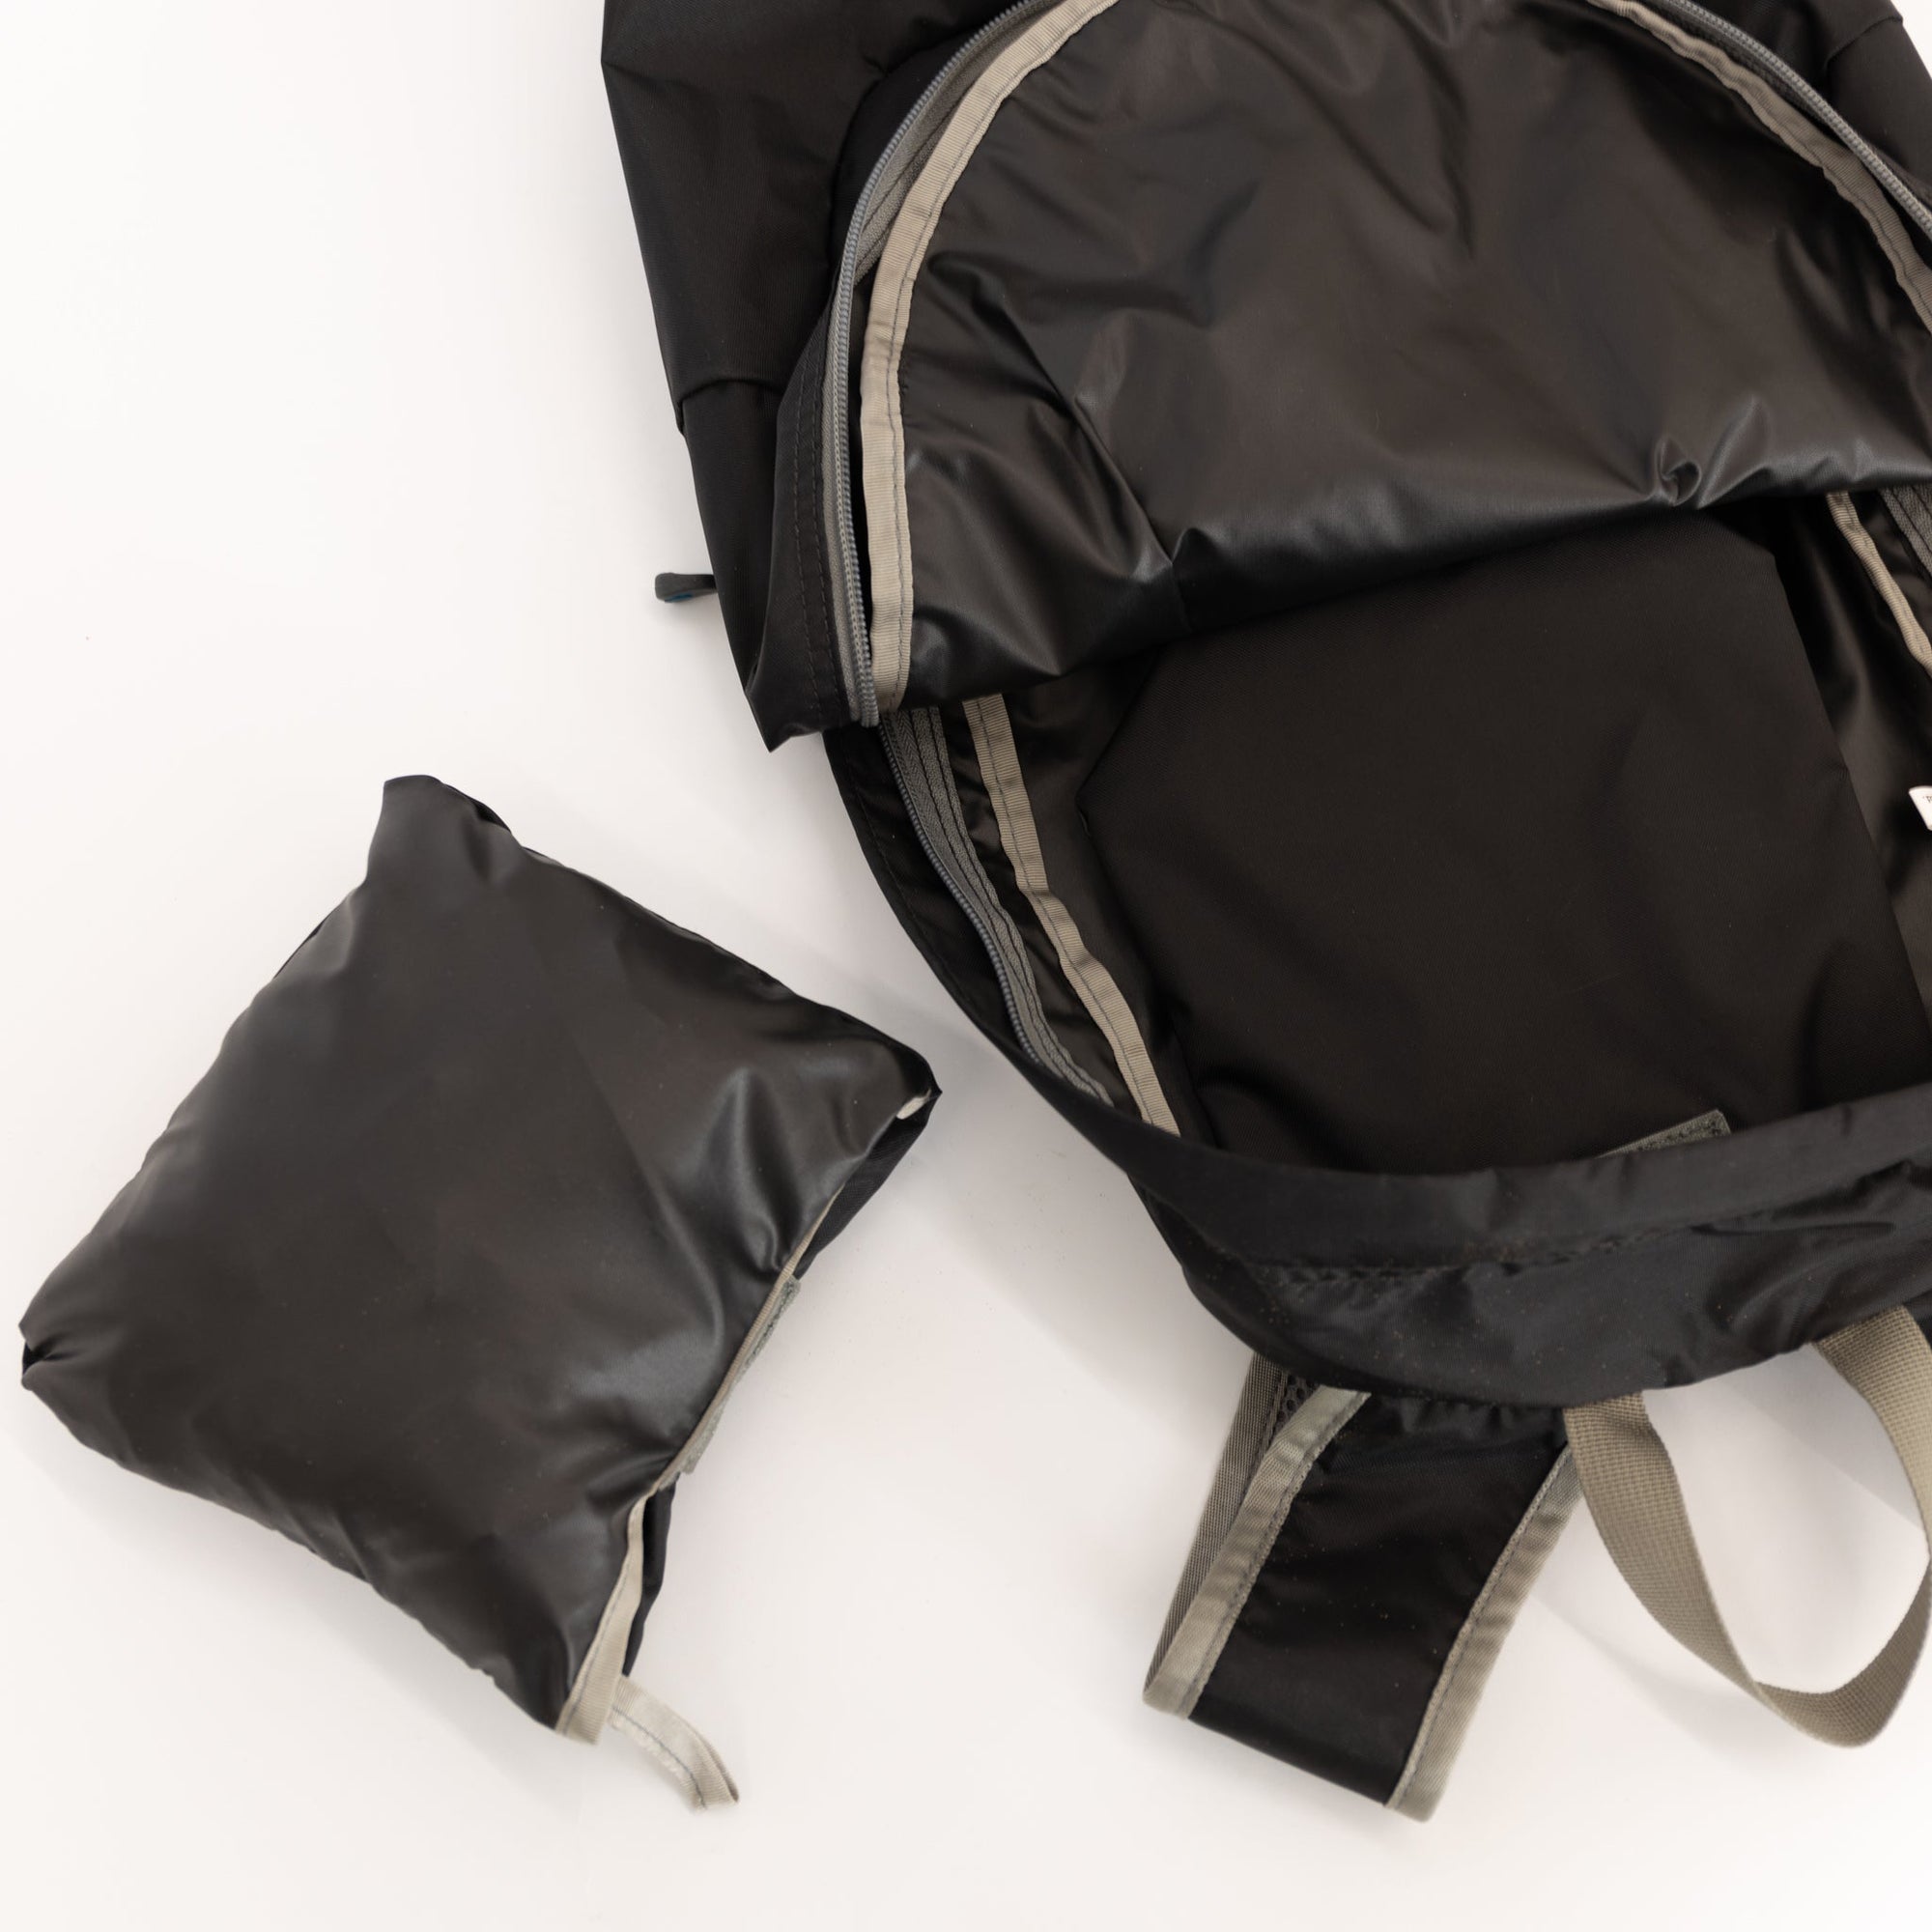 Montbell Pocketable Daypack 20L | Tortoise General Store